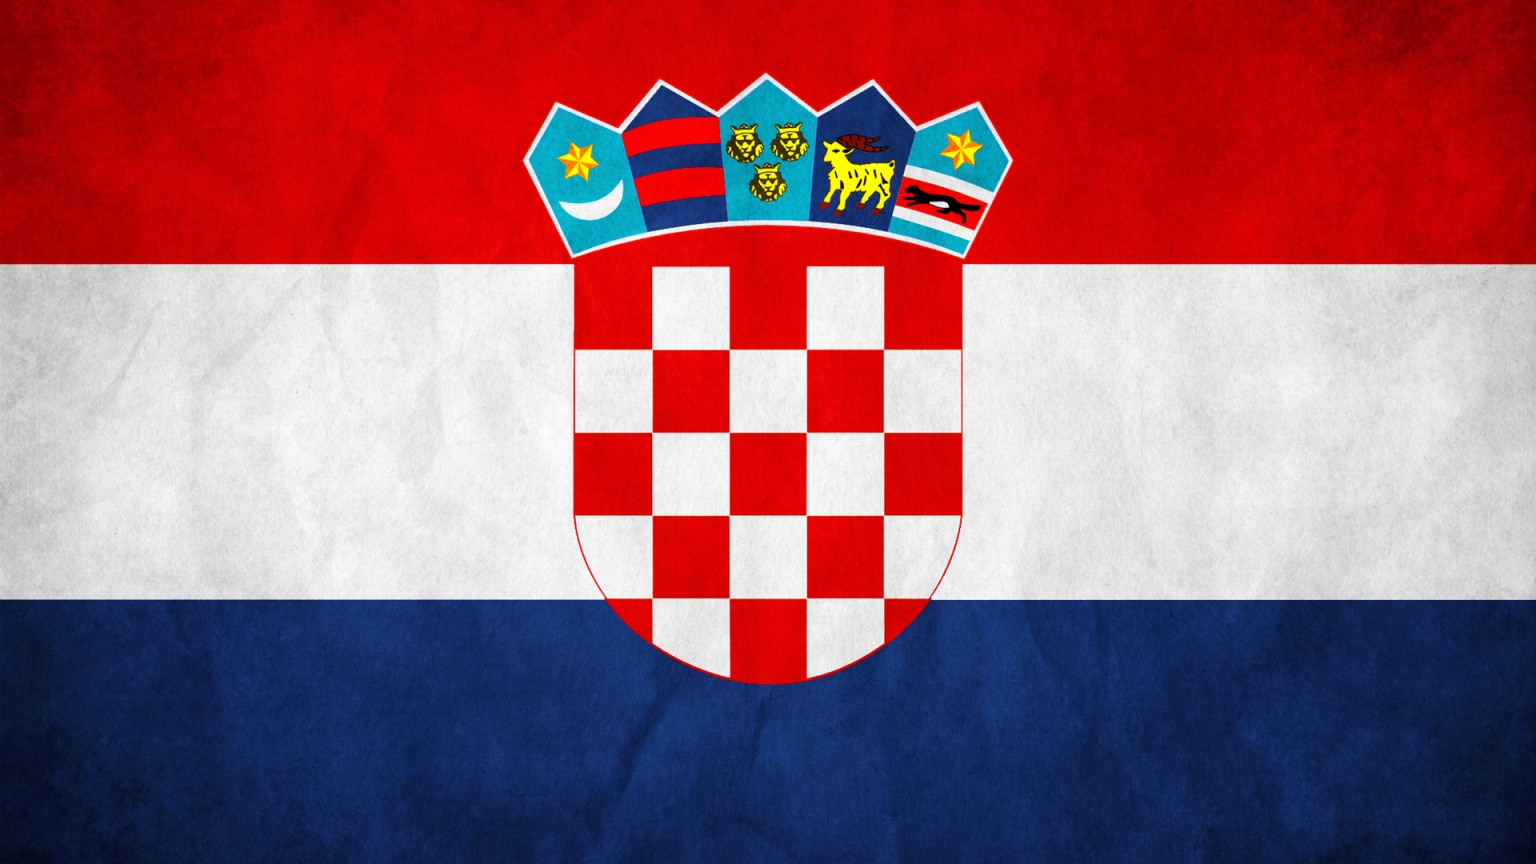 The Republic of Croatia Flag for 1536 x 864 HDTV resolution